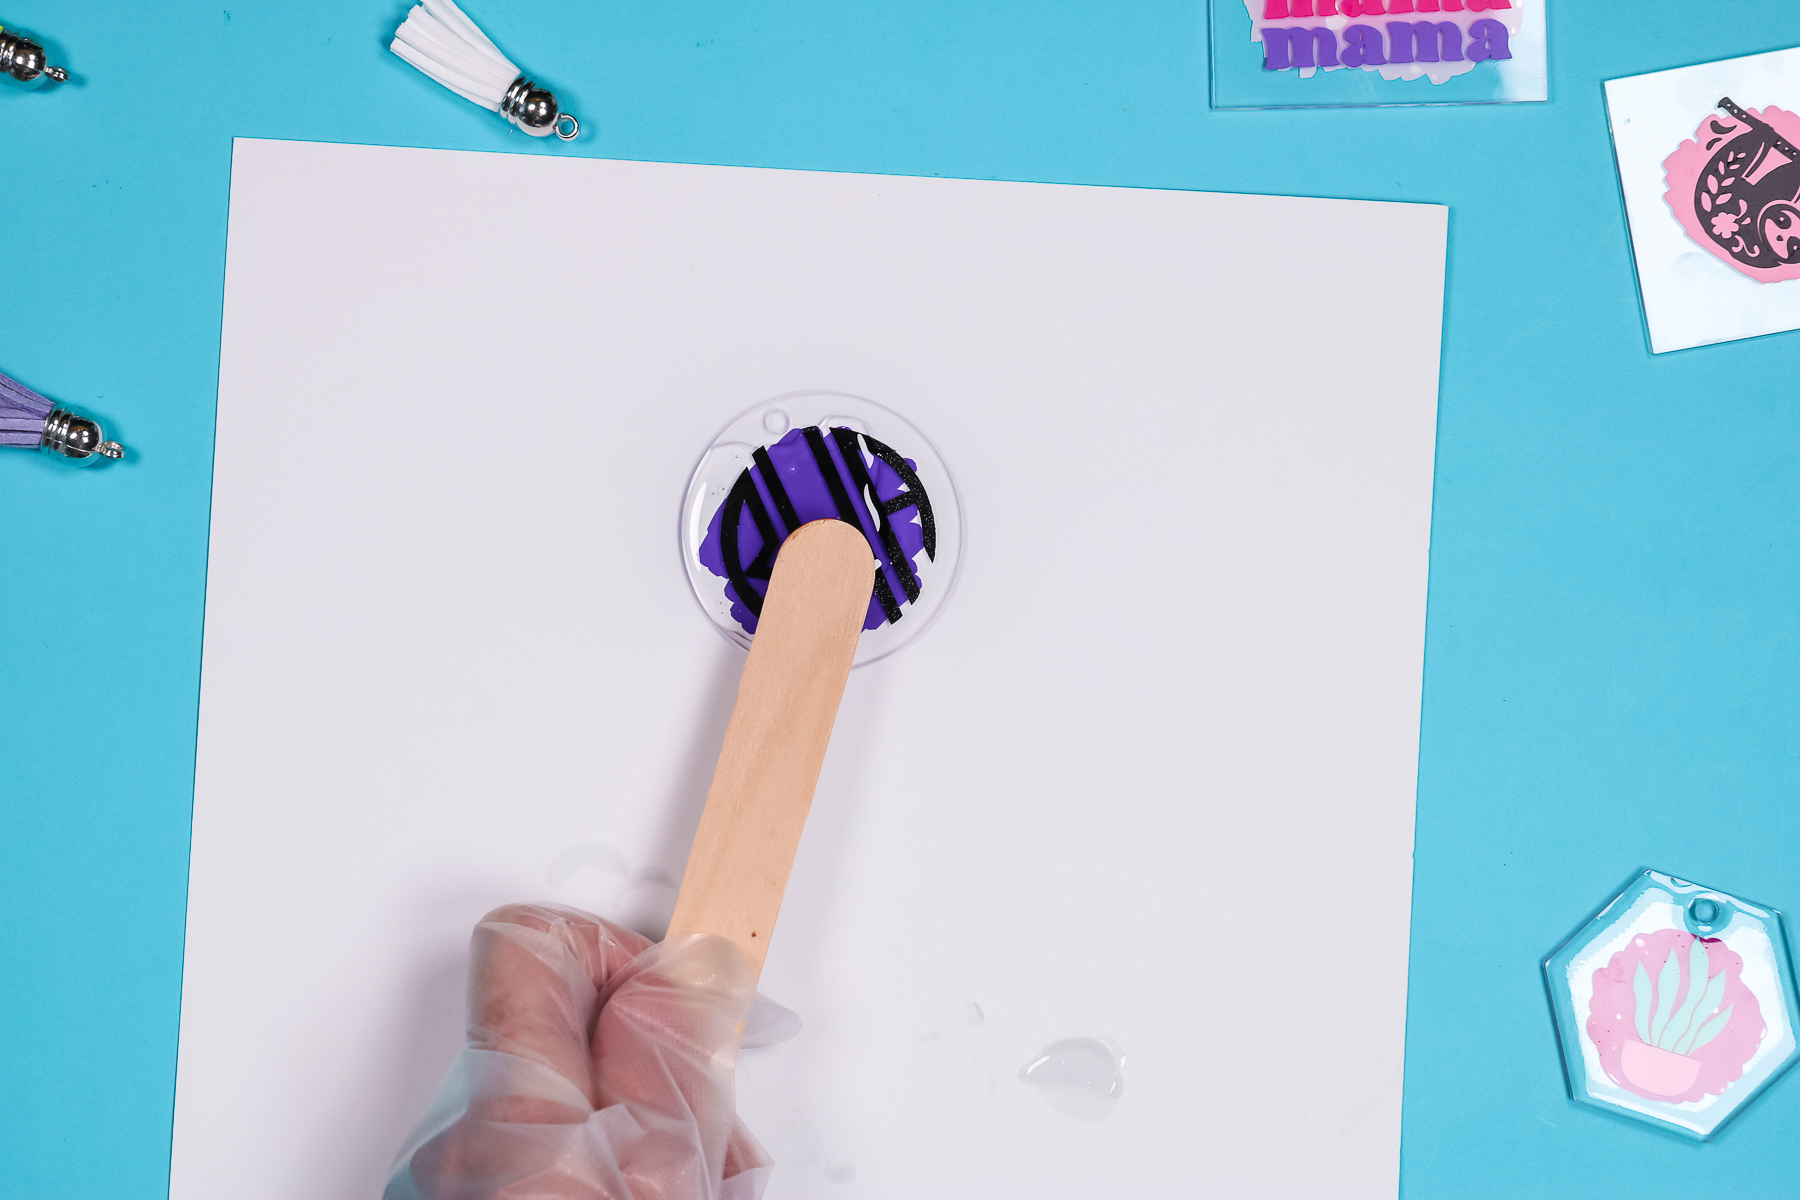 Use popsicle stick to move UV resin around.